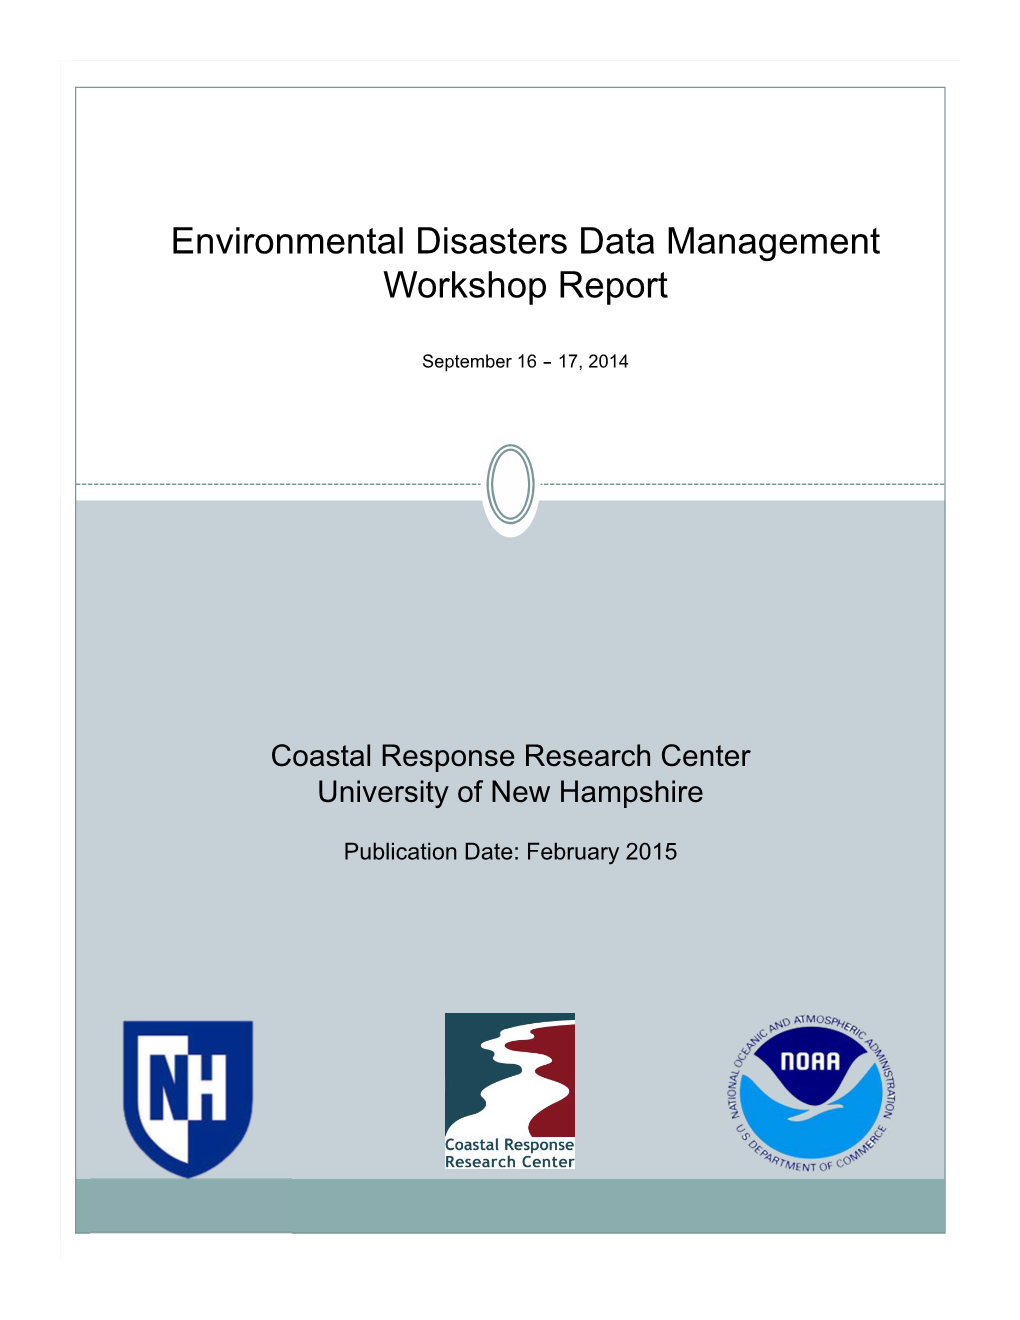 Environmental Disasters Data Management Workshop Report